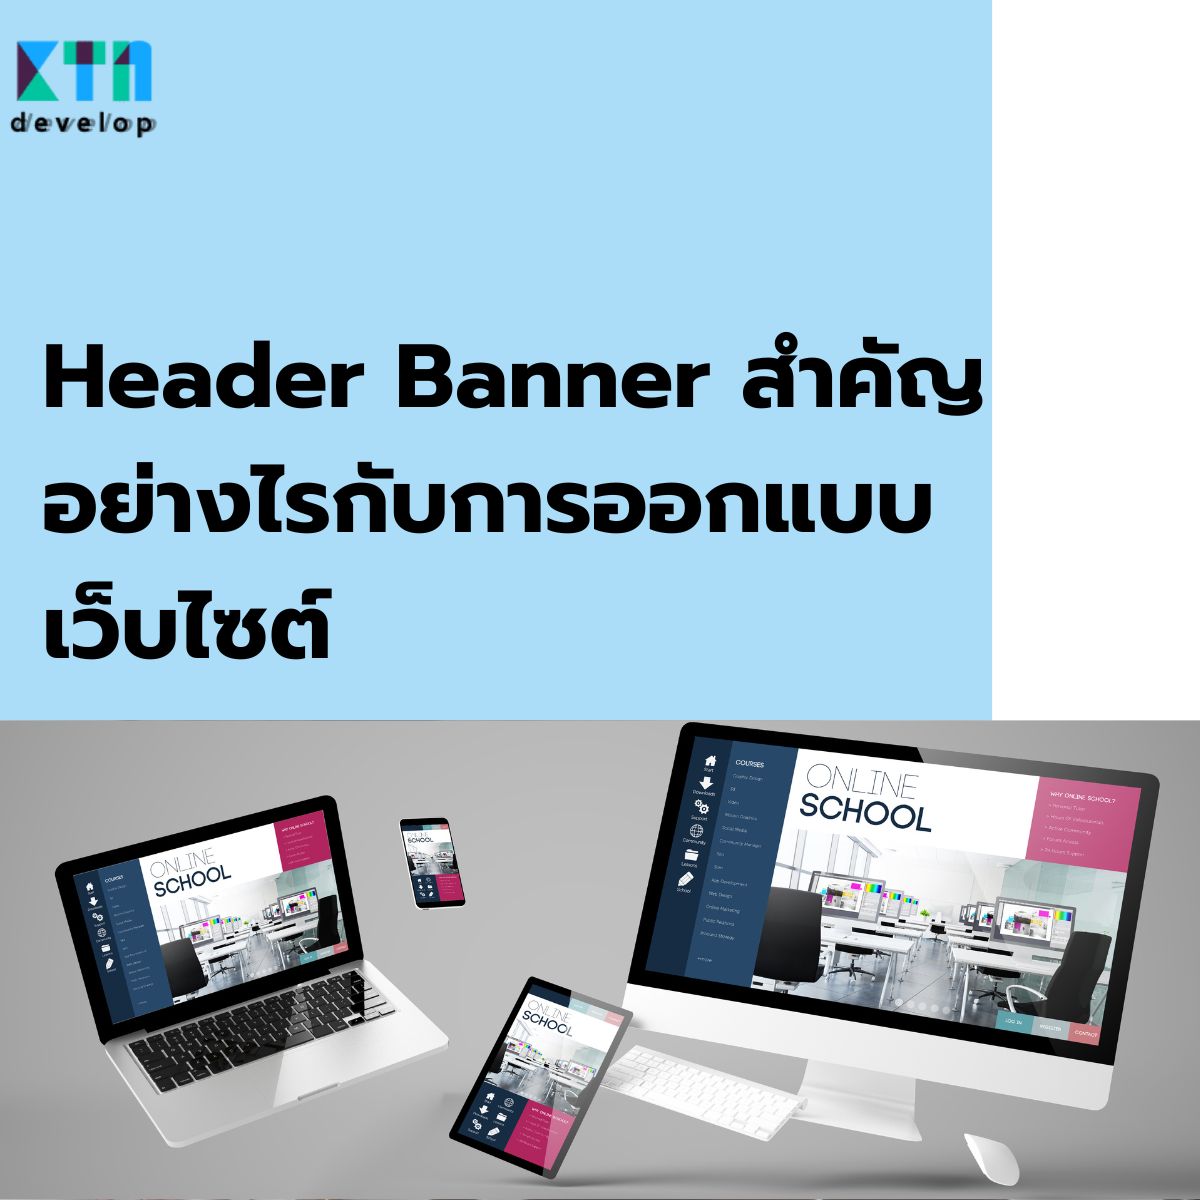 Header Banner สำคัญอย่างไรกับการออกแบบเว็บไซต์